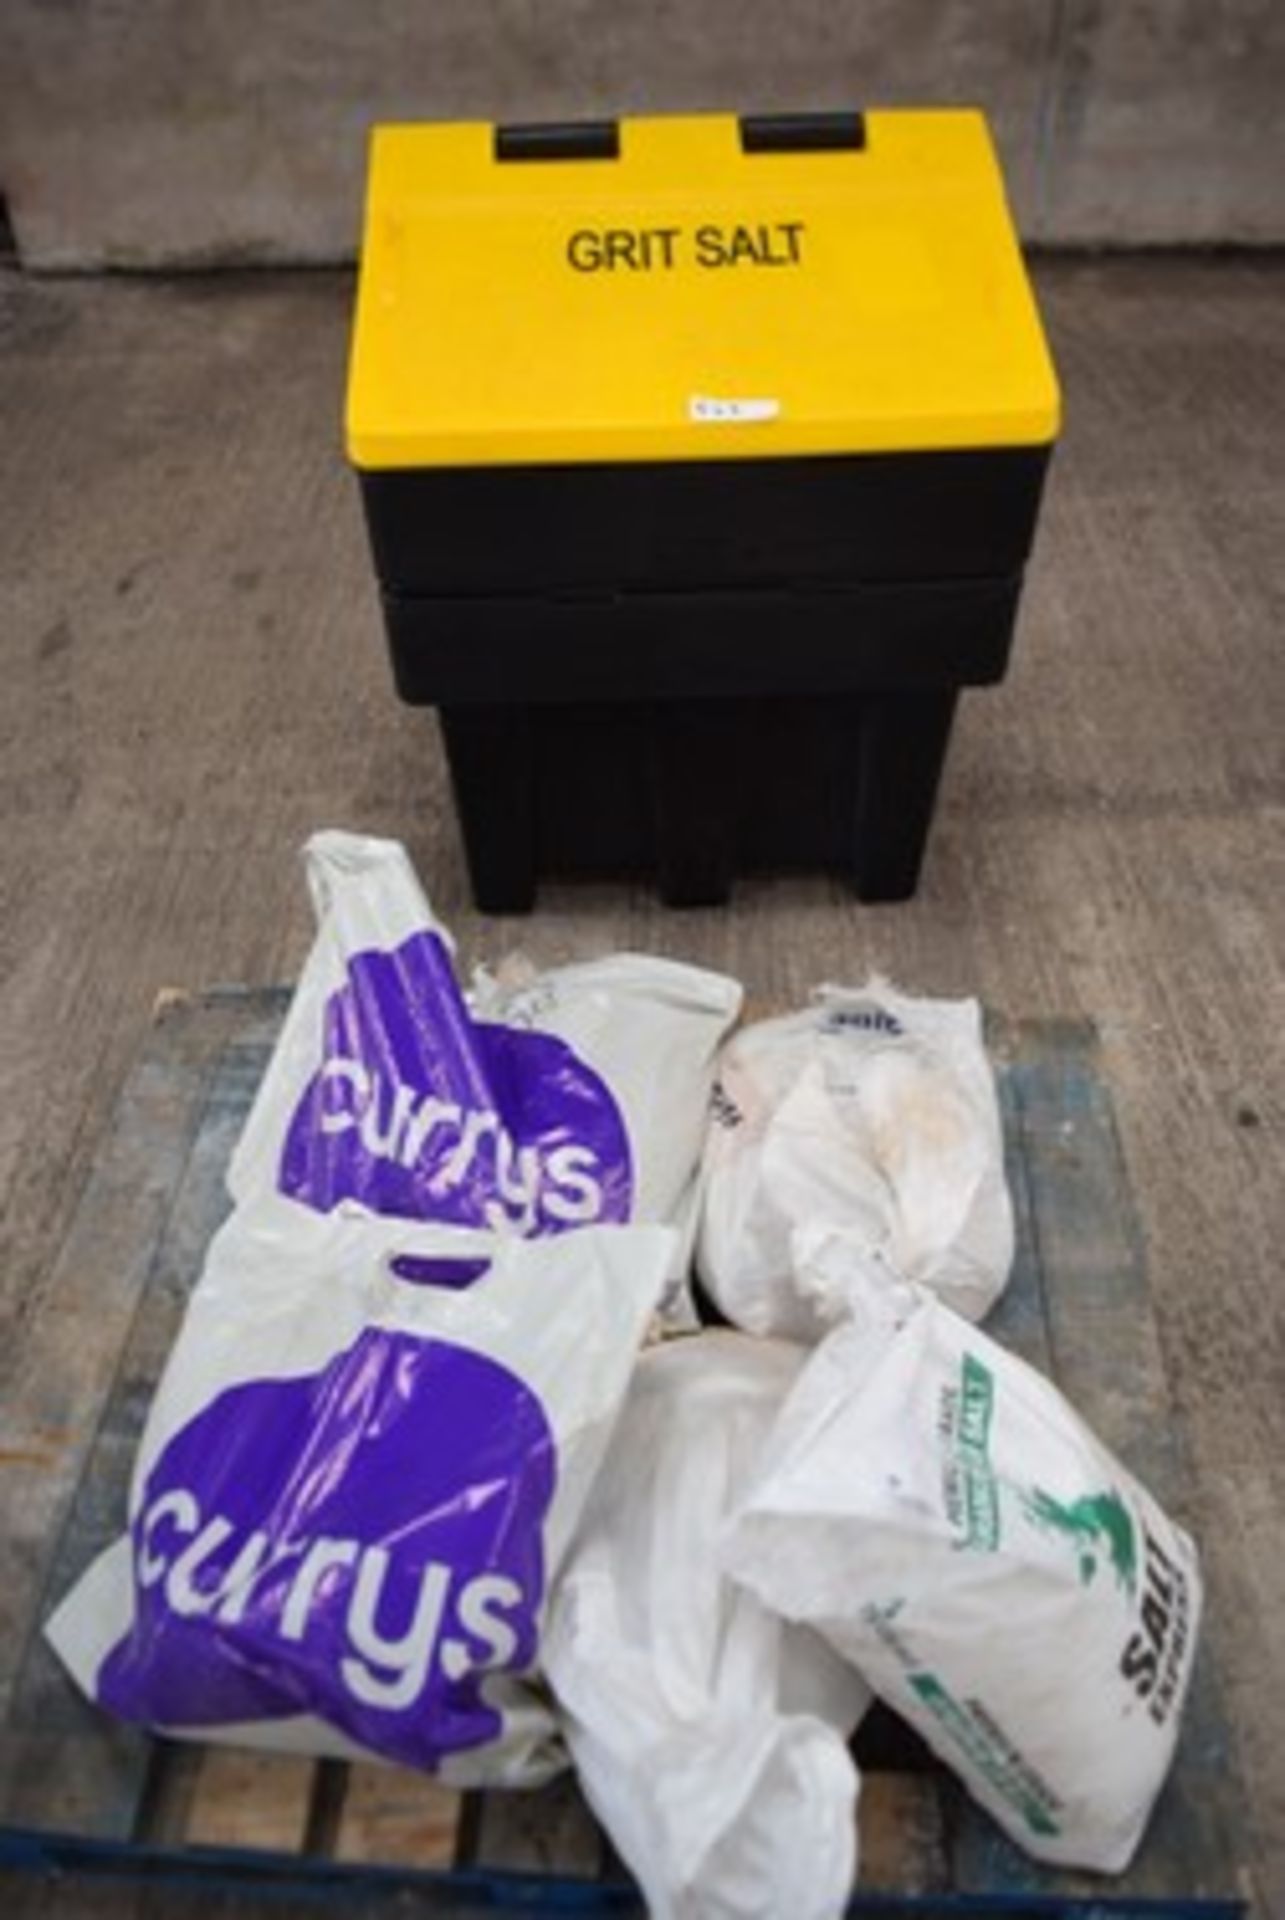 2 x black and yellow PVC grit salt bins and 4 x bags of rock salt, 1 x bag of granular salt - new (